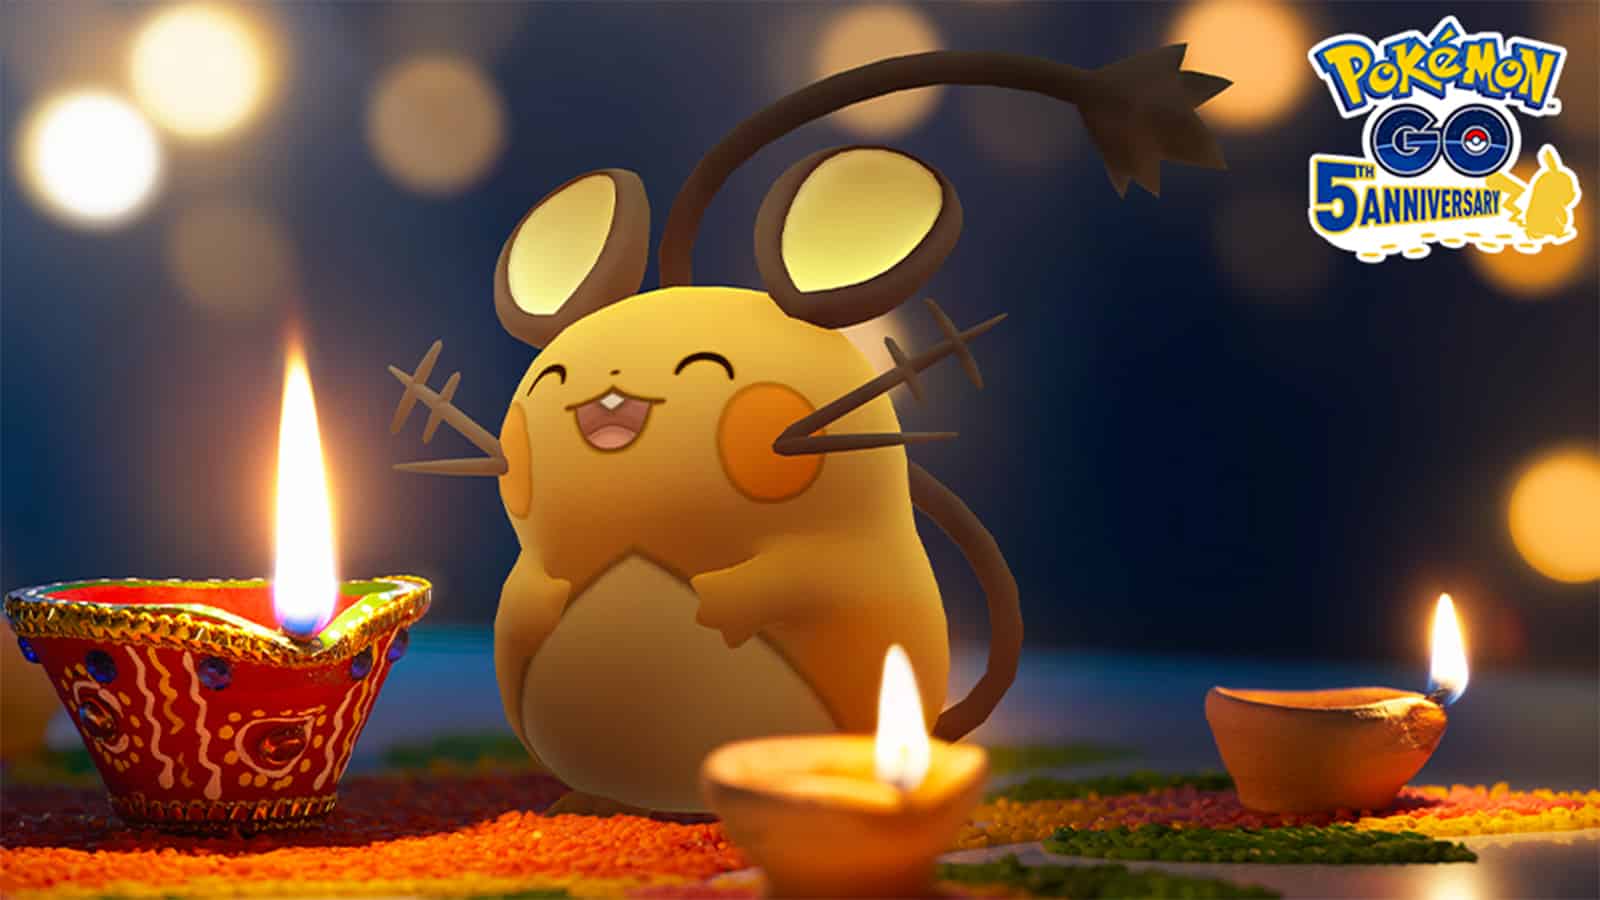 Dedenne in Pokemon Go's Festival of Lights